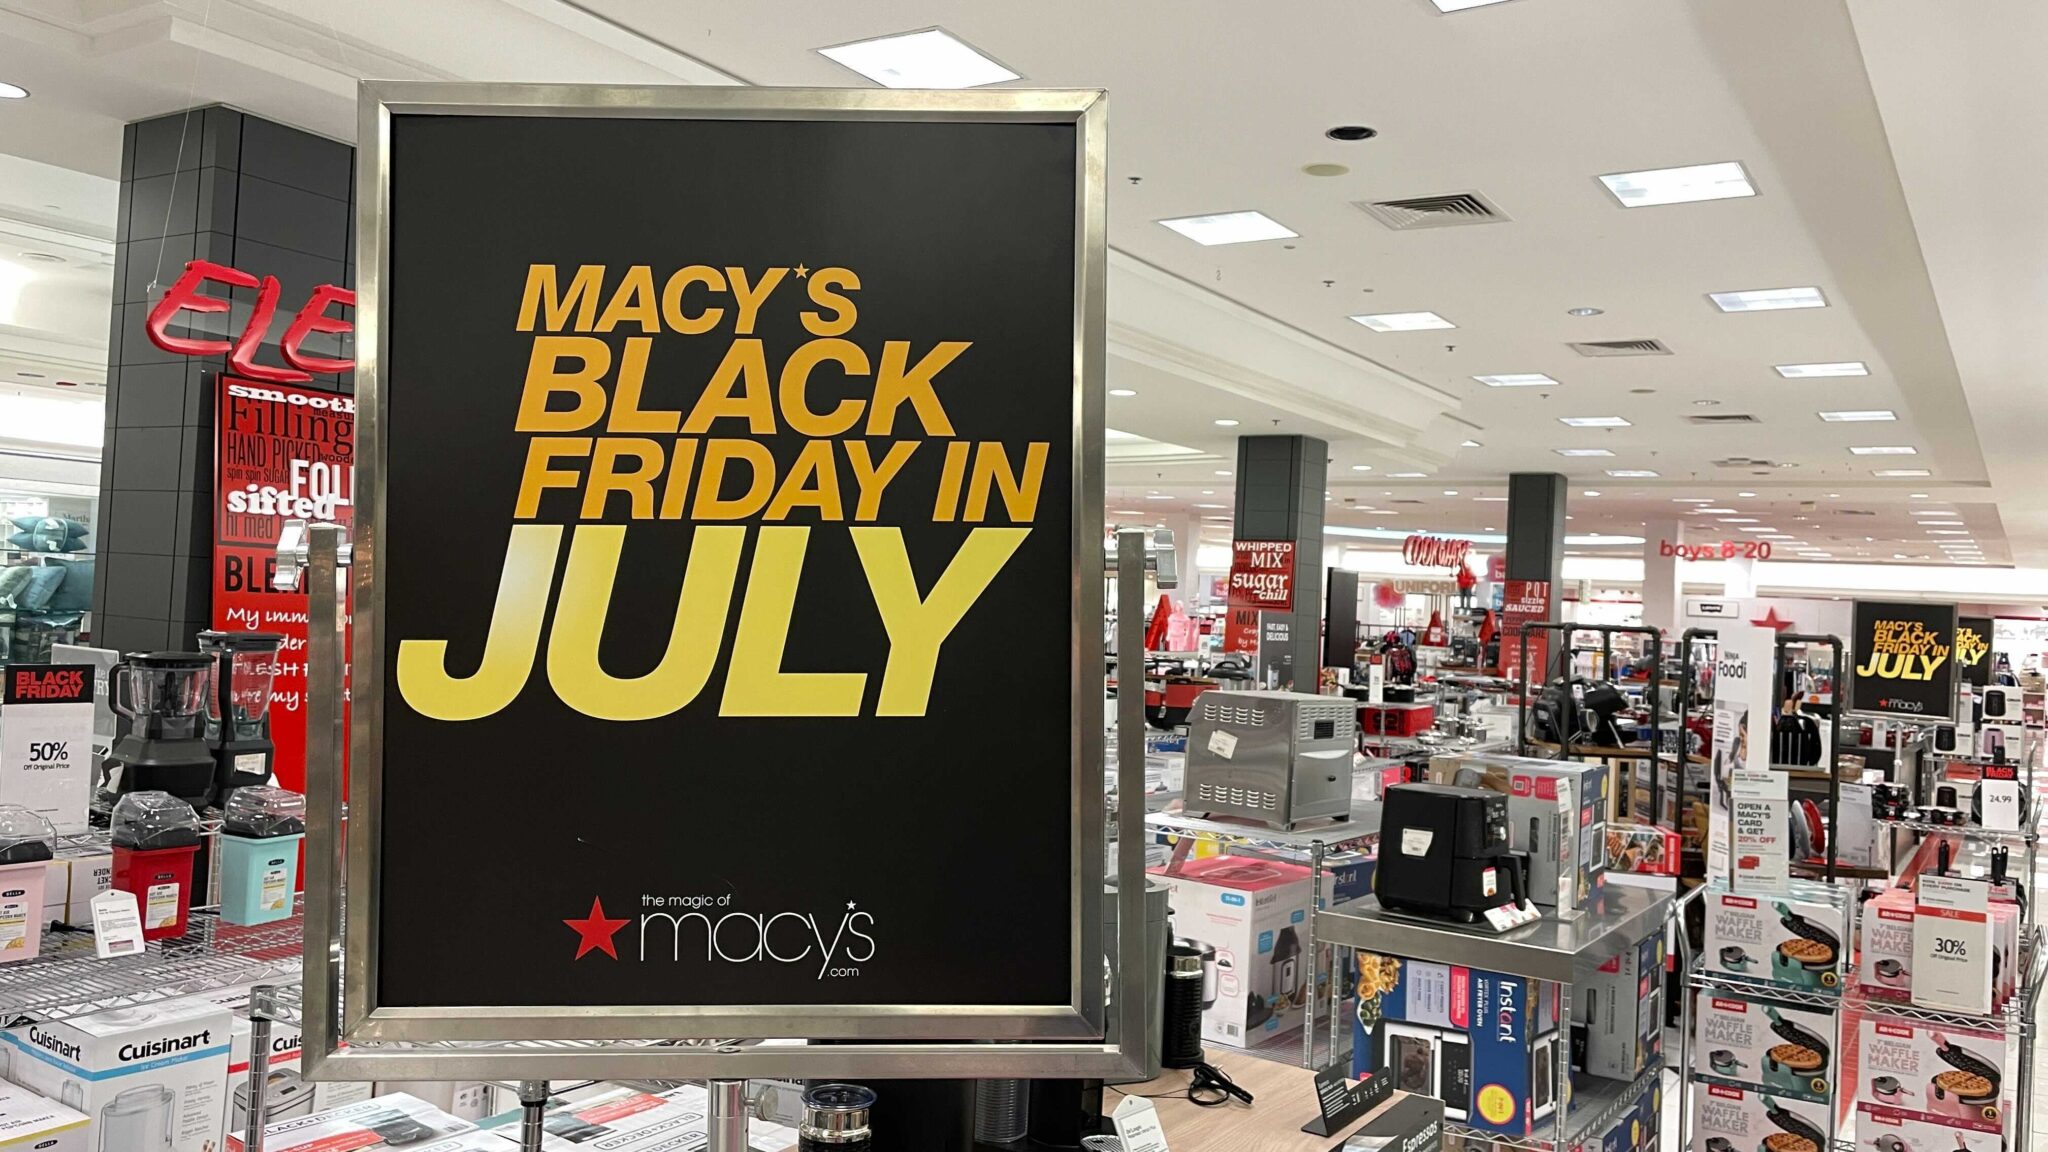 Macy's Black Friday in July Sale is Live! The Freebie Guy®